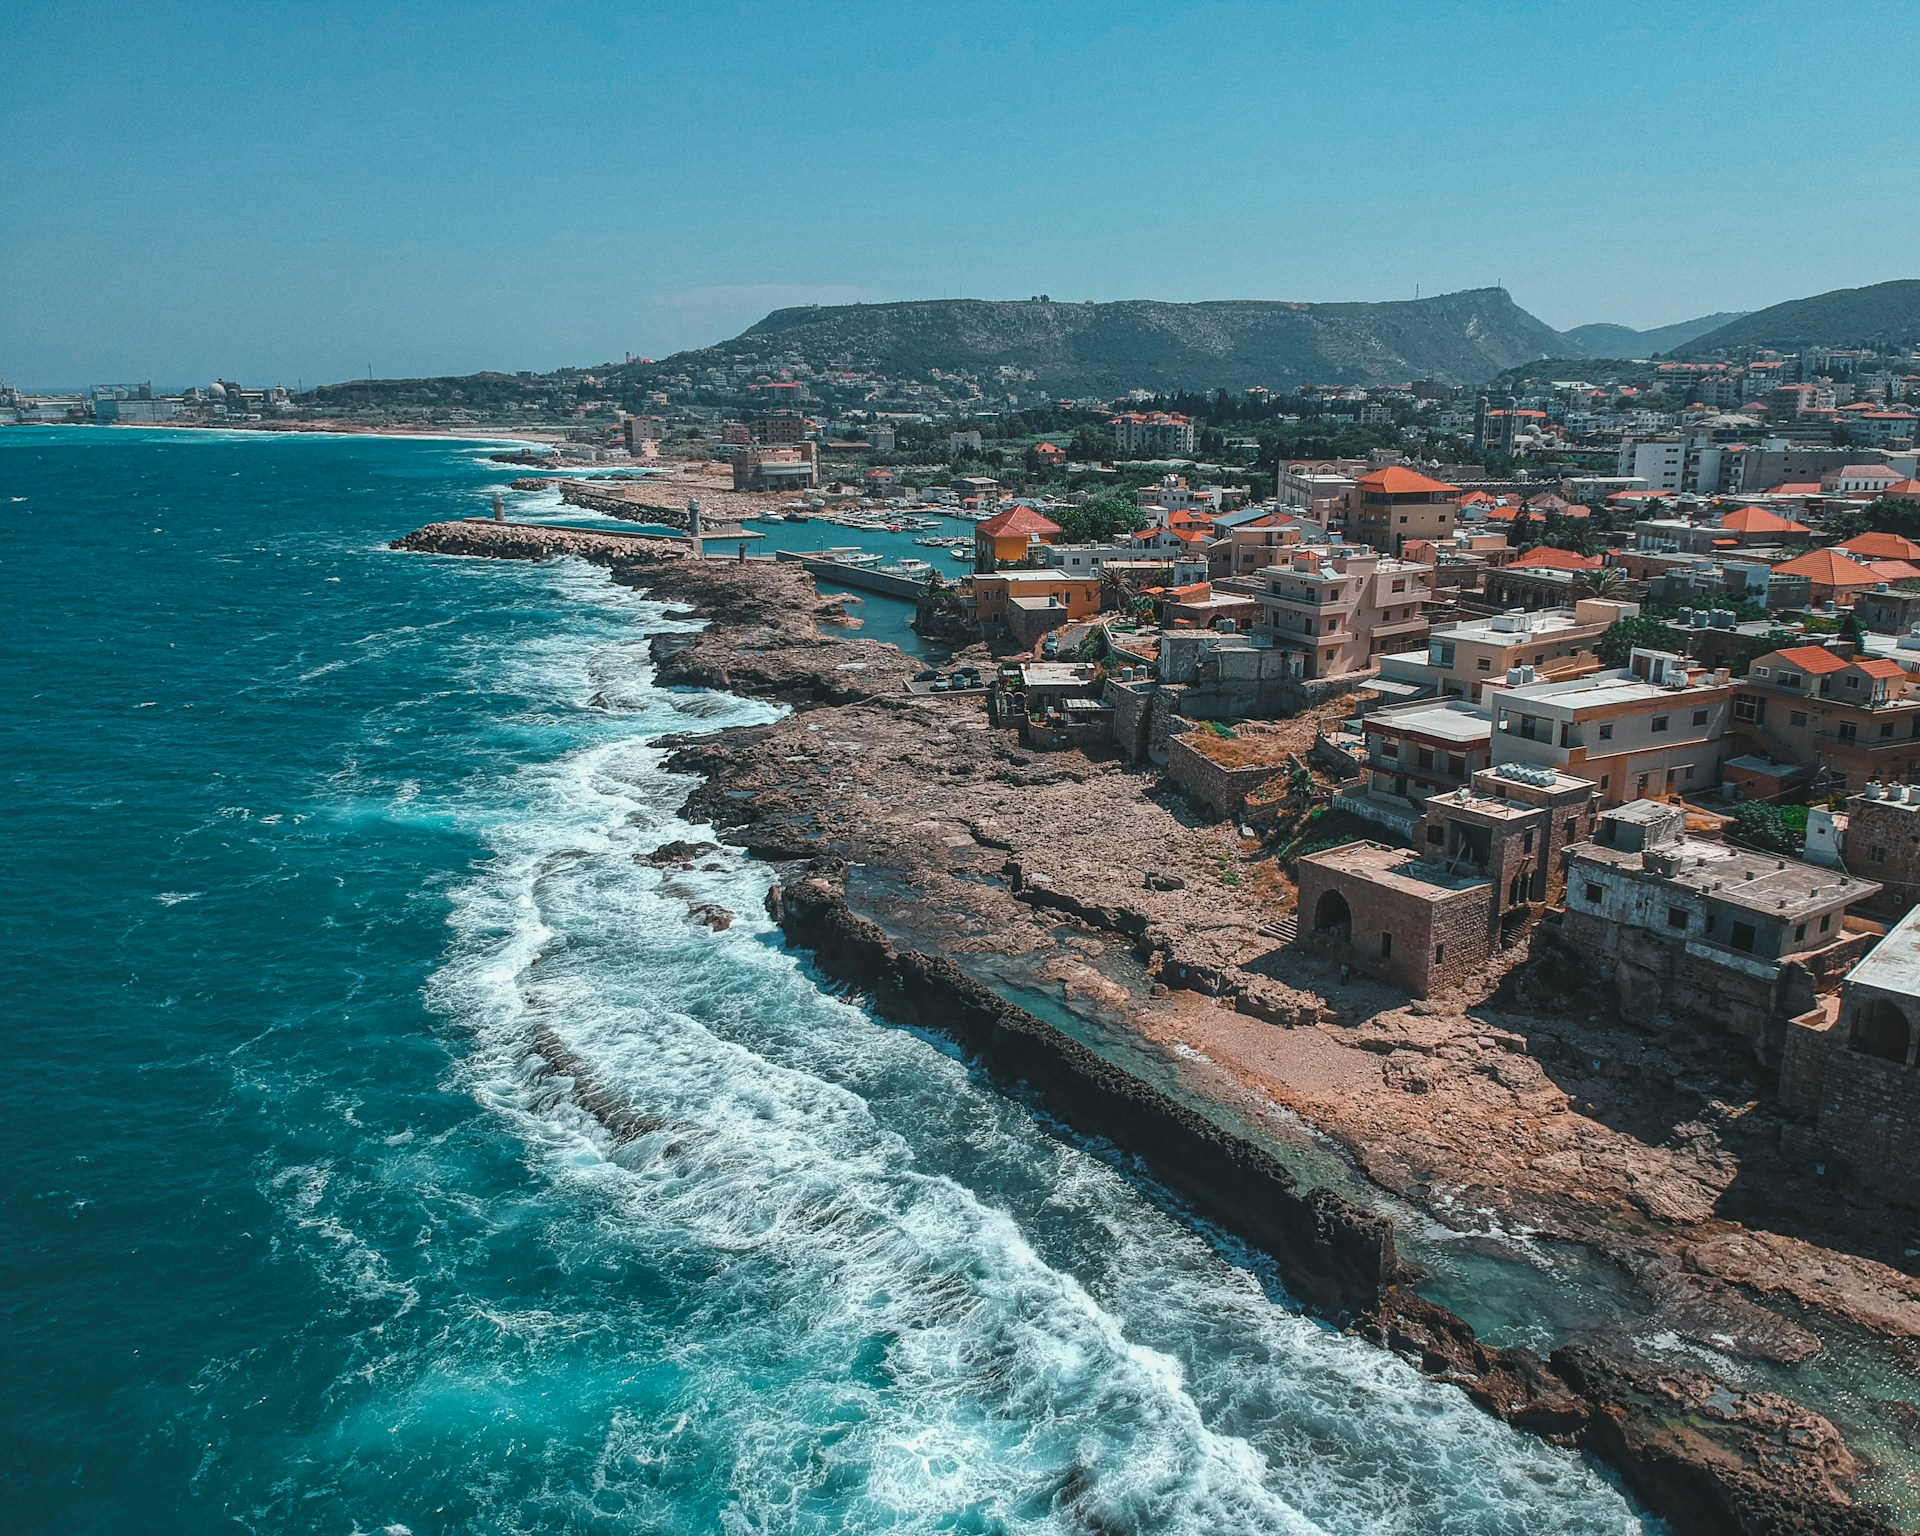 A coastal town in Lebanon.